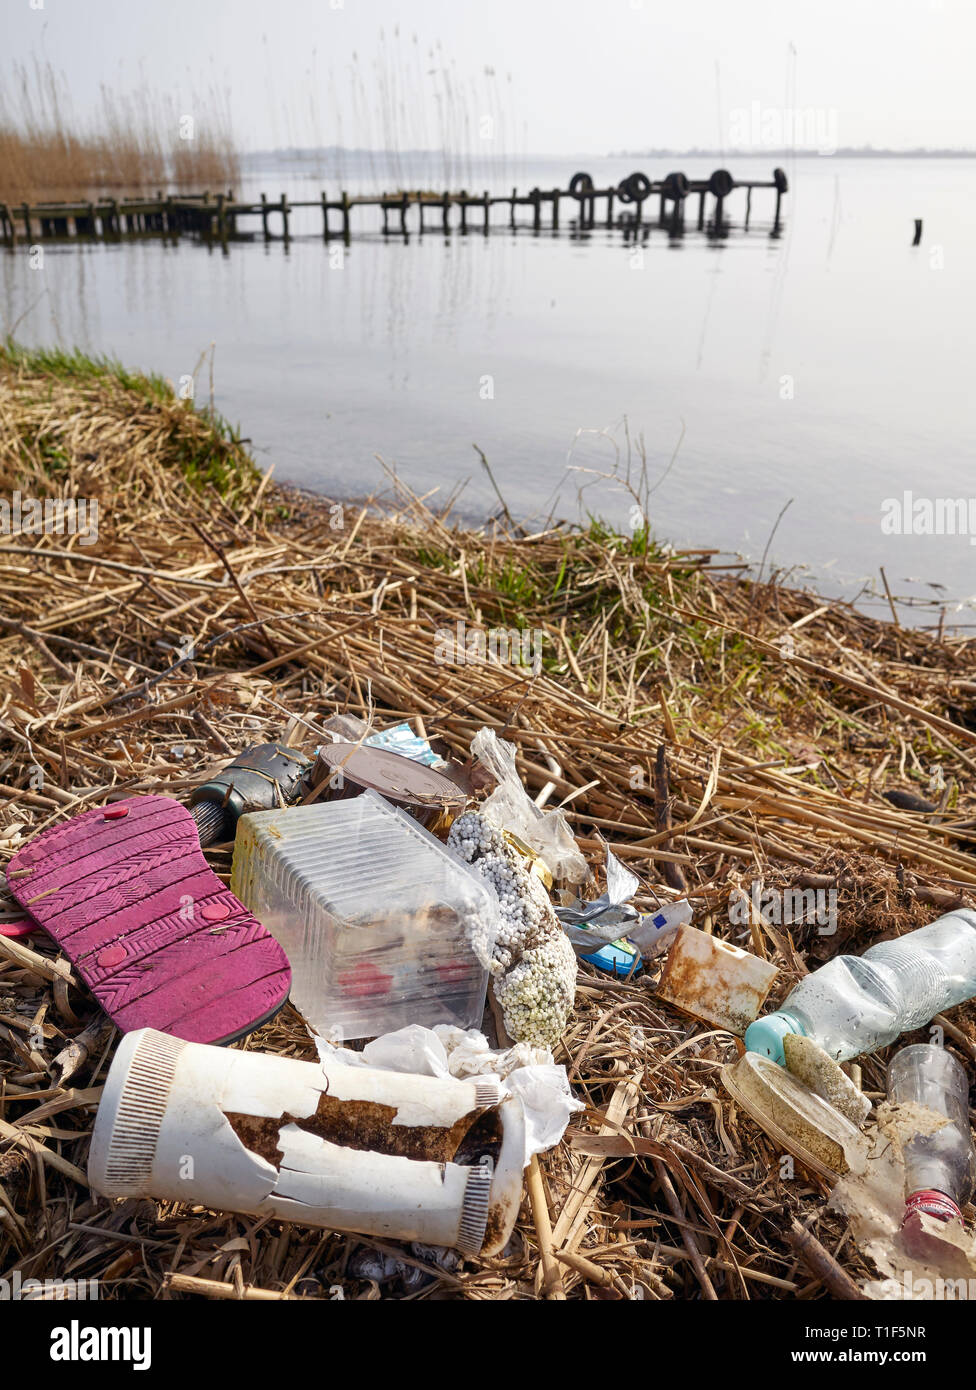 Müll durch einen Fluss Bank verlassen, Umweltverschmutzung problem Konzept Bild. Stockfoto